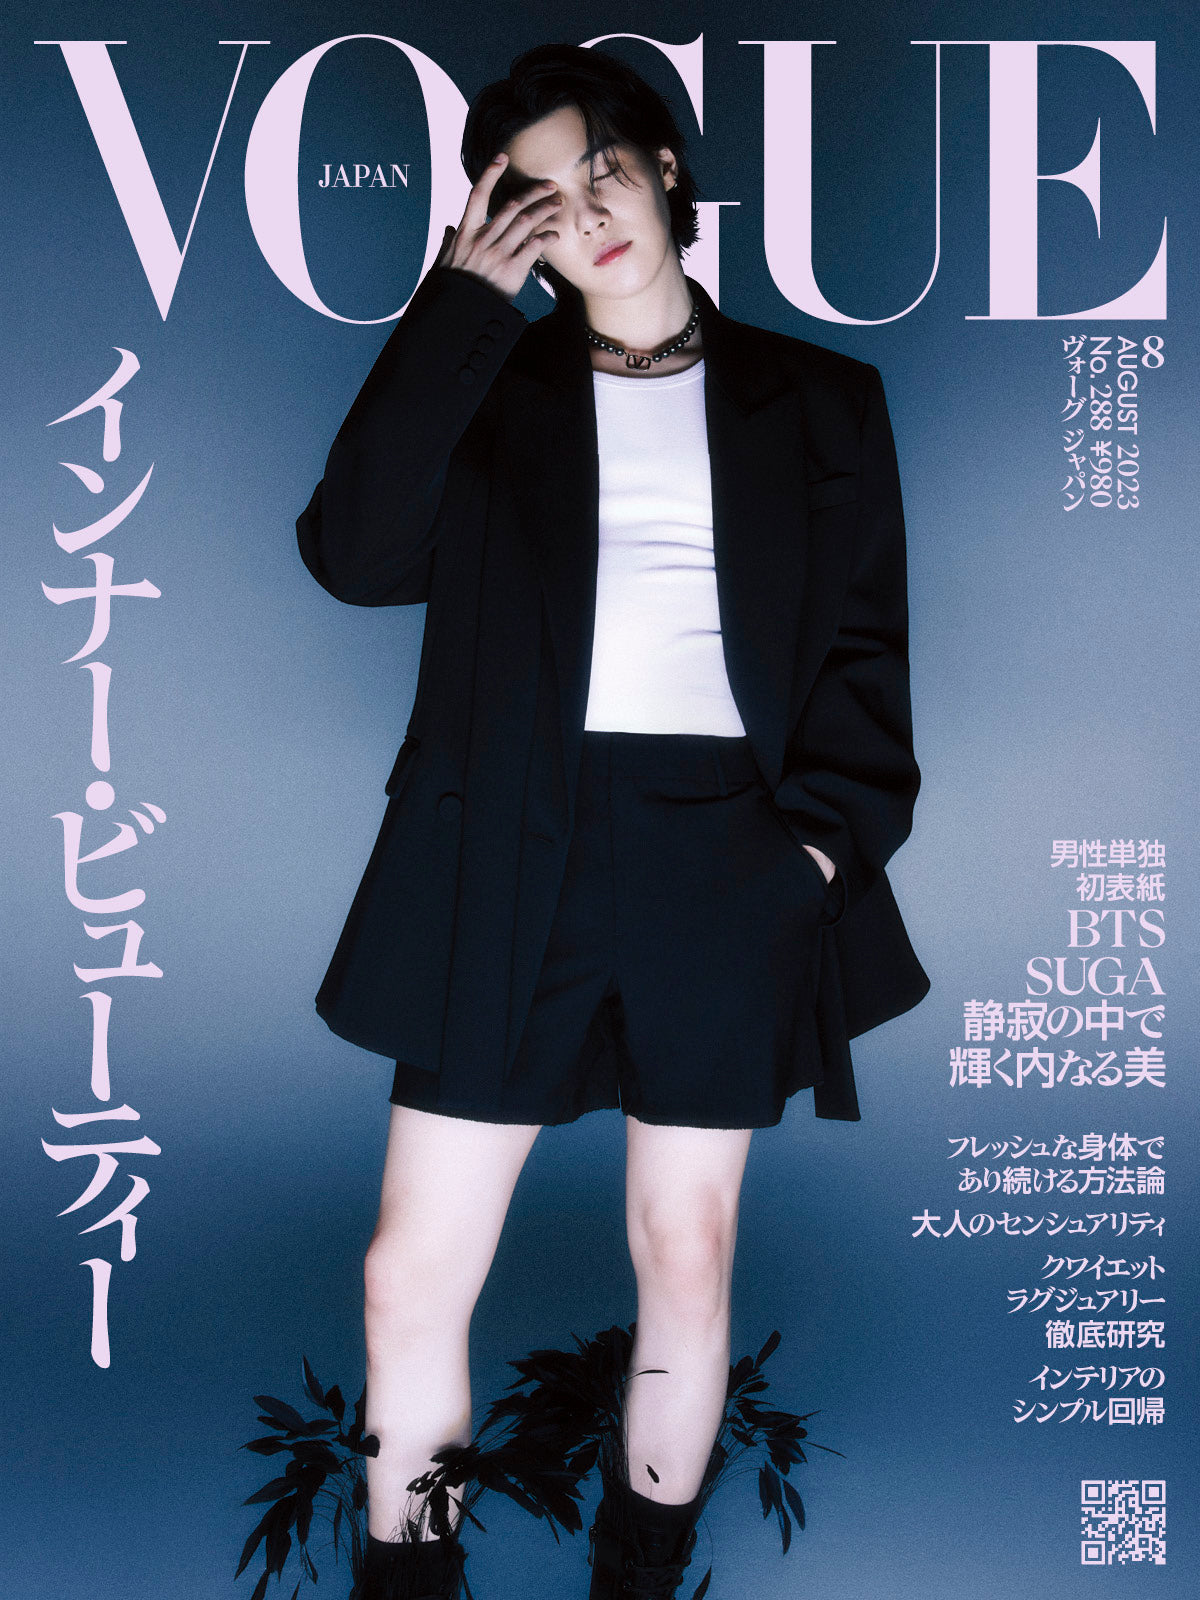 Vogue Korea Magazine, Jul-22